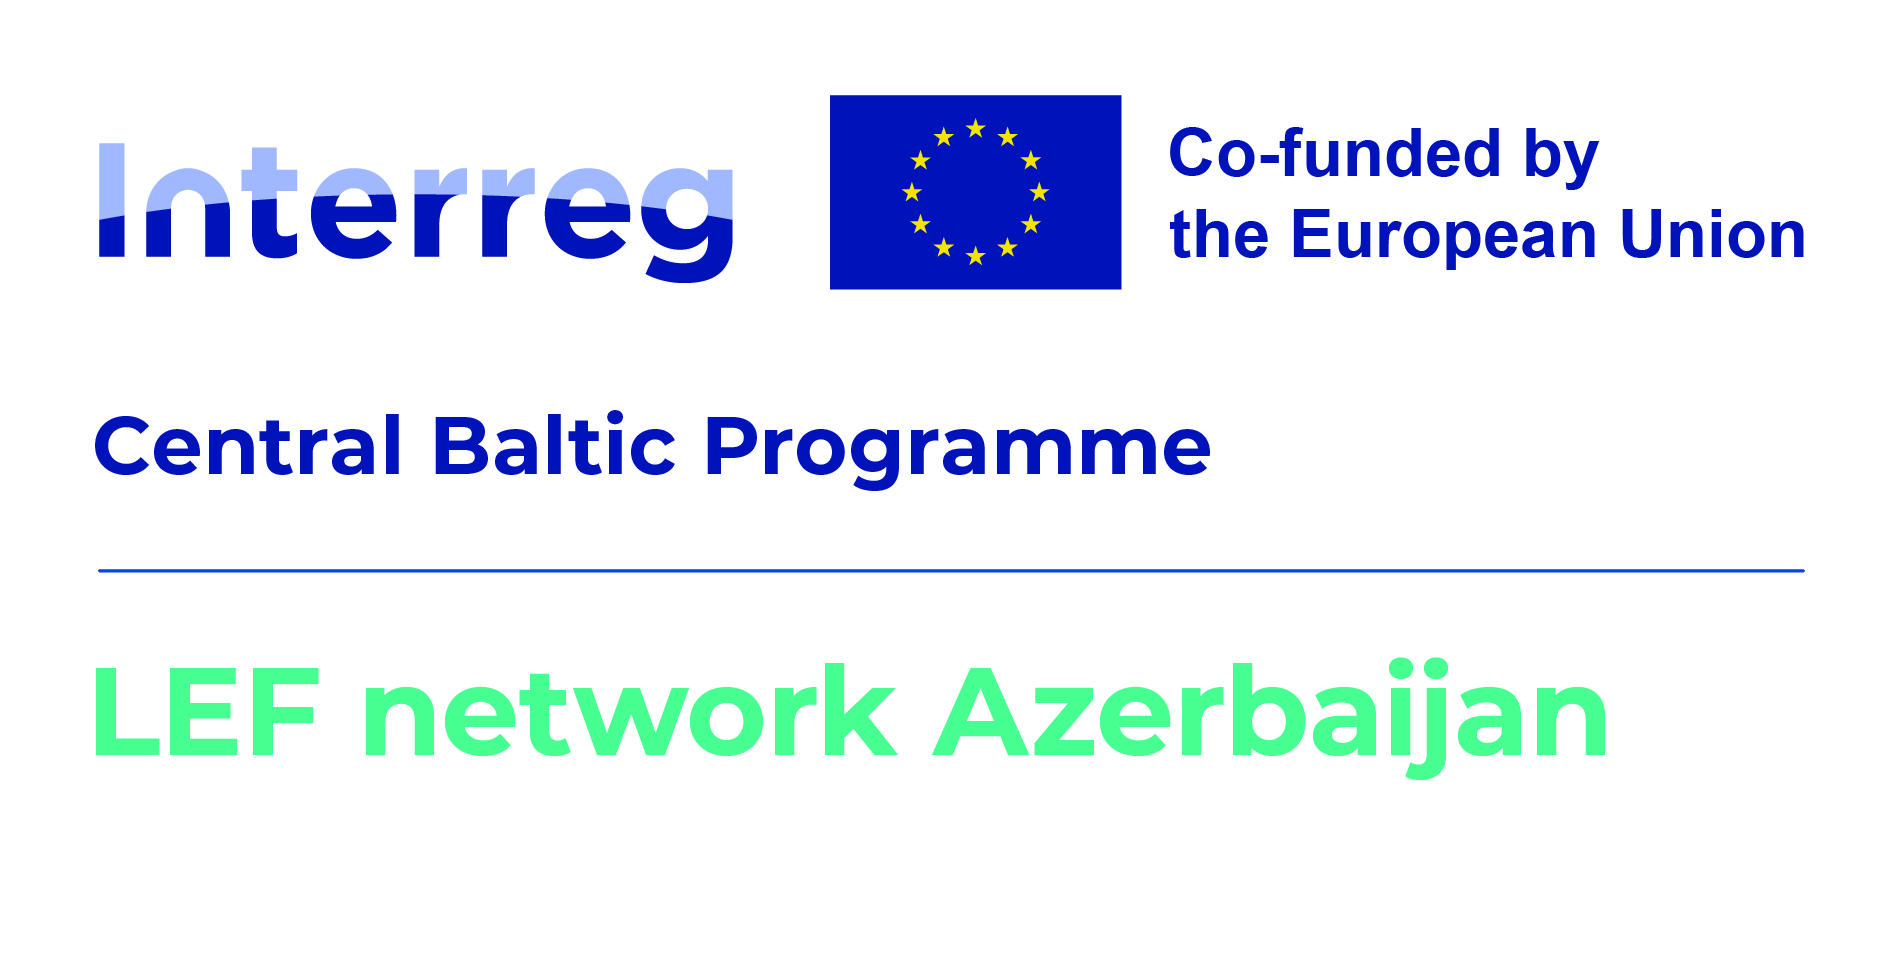 Central Baltic Programme LEF network Azerbaijan